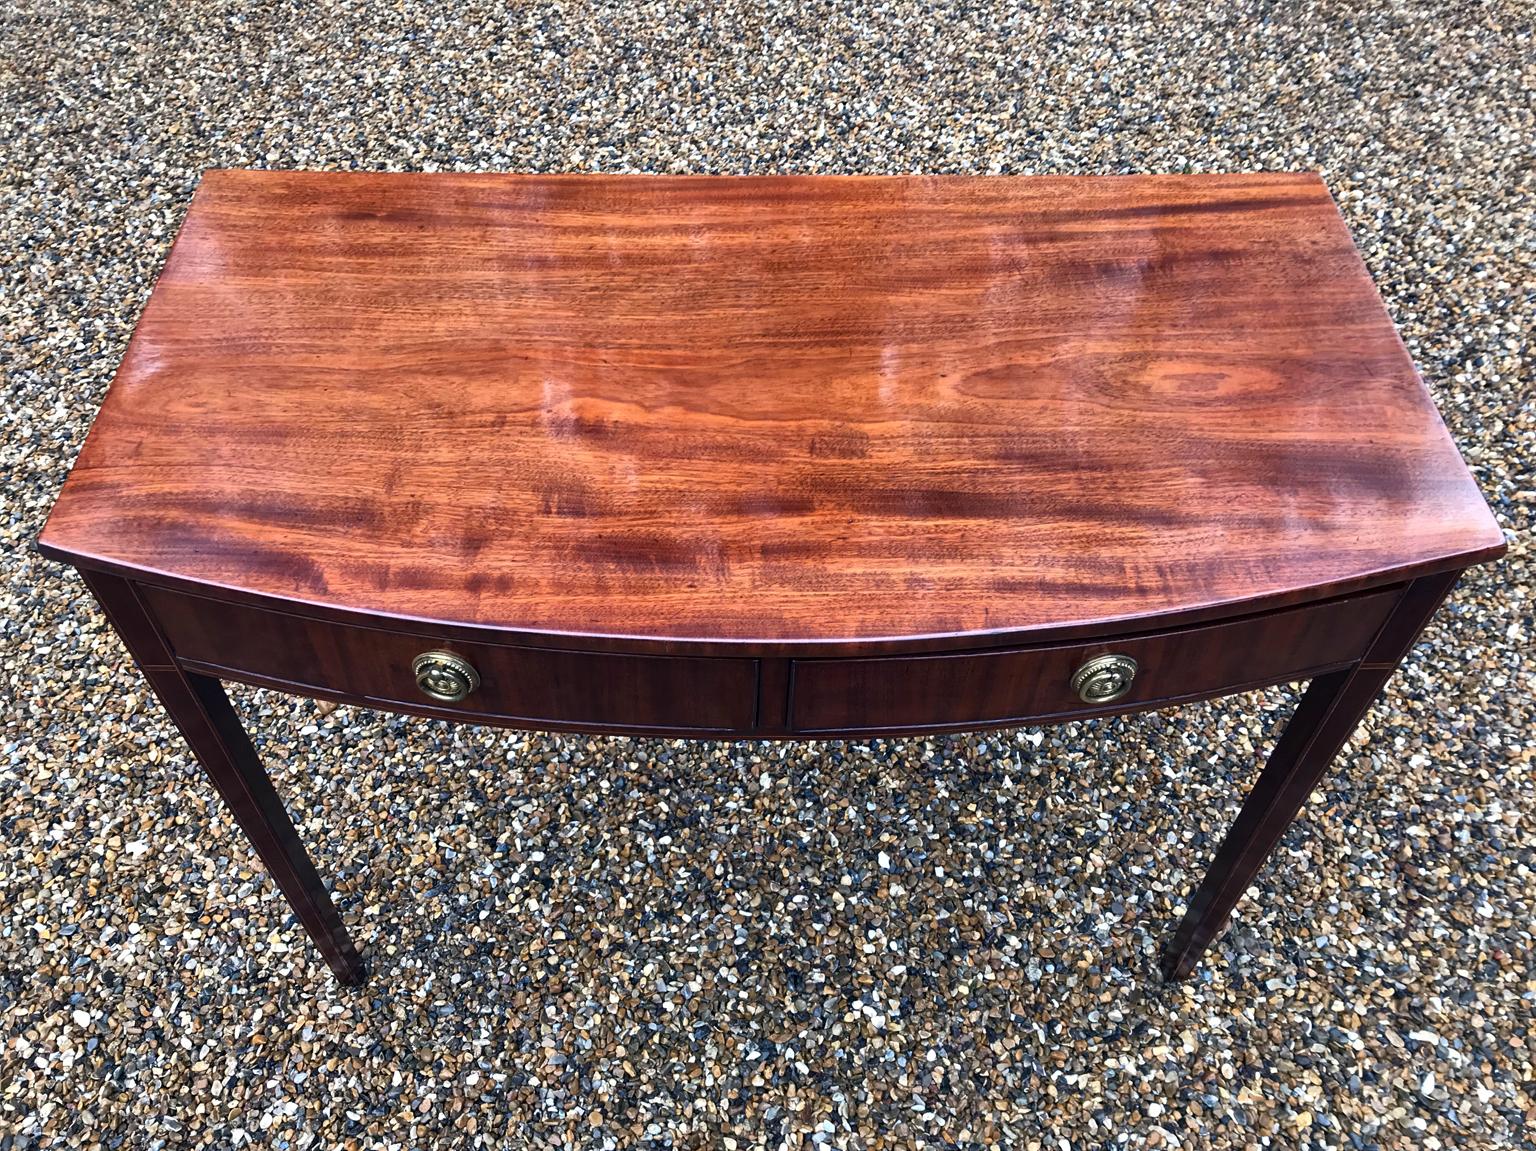 19th Century Regency Mahogany Bow Fronted Side Table (19. Jahrhundert)